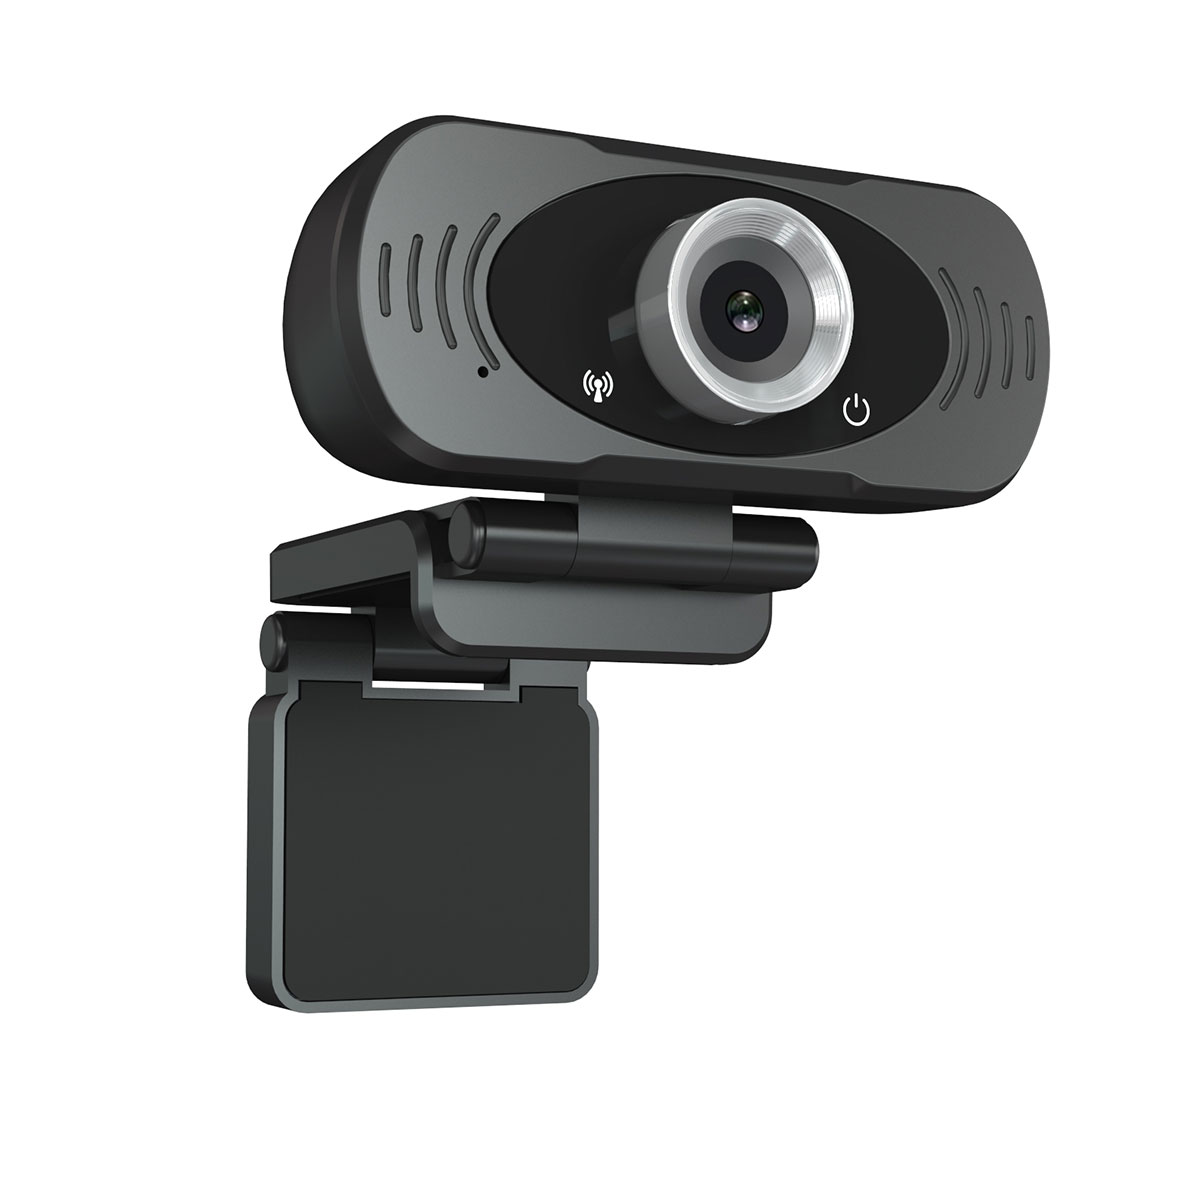 Find 1080P 1920 1080 30FPS Sensor Multifunctional Conference Live Webcam Built in Microphone for Laptop Desktop for Sale on Gipsybee.com with cryptocurrencies